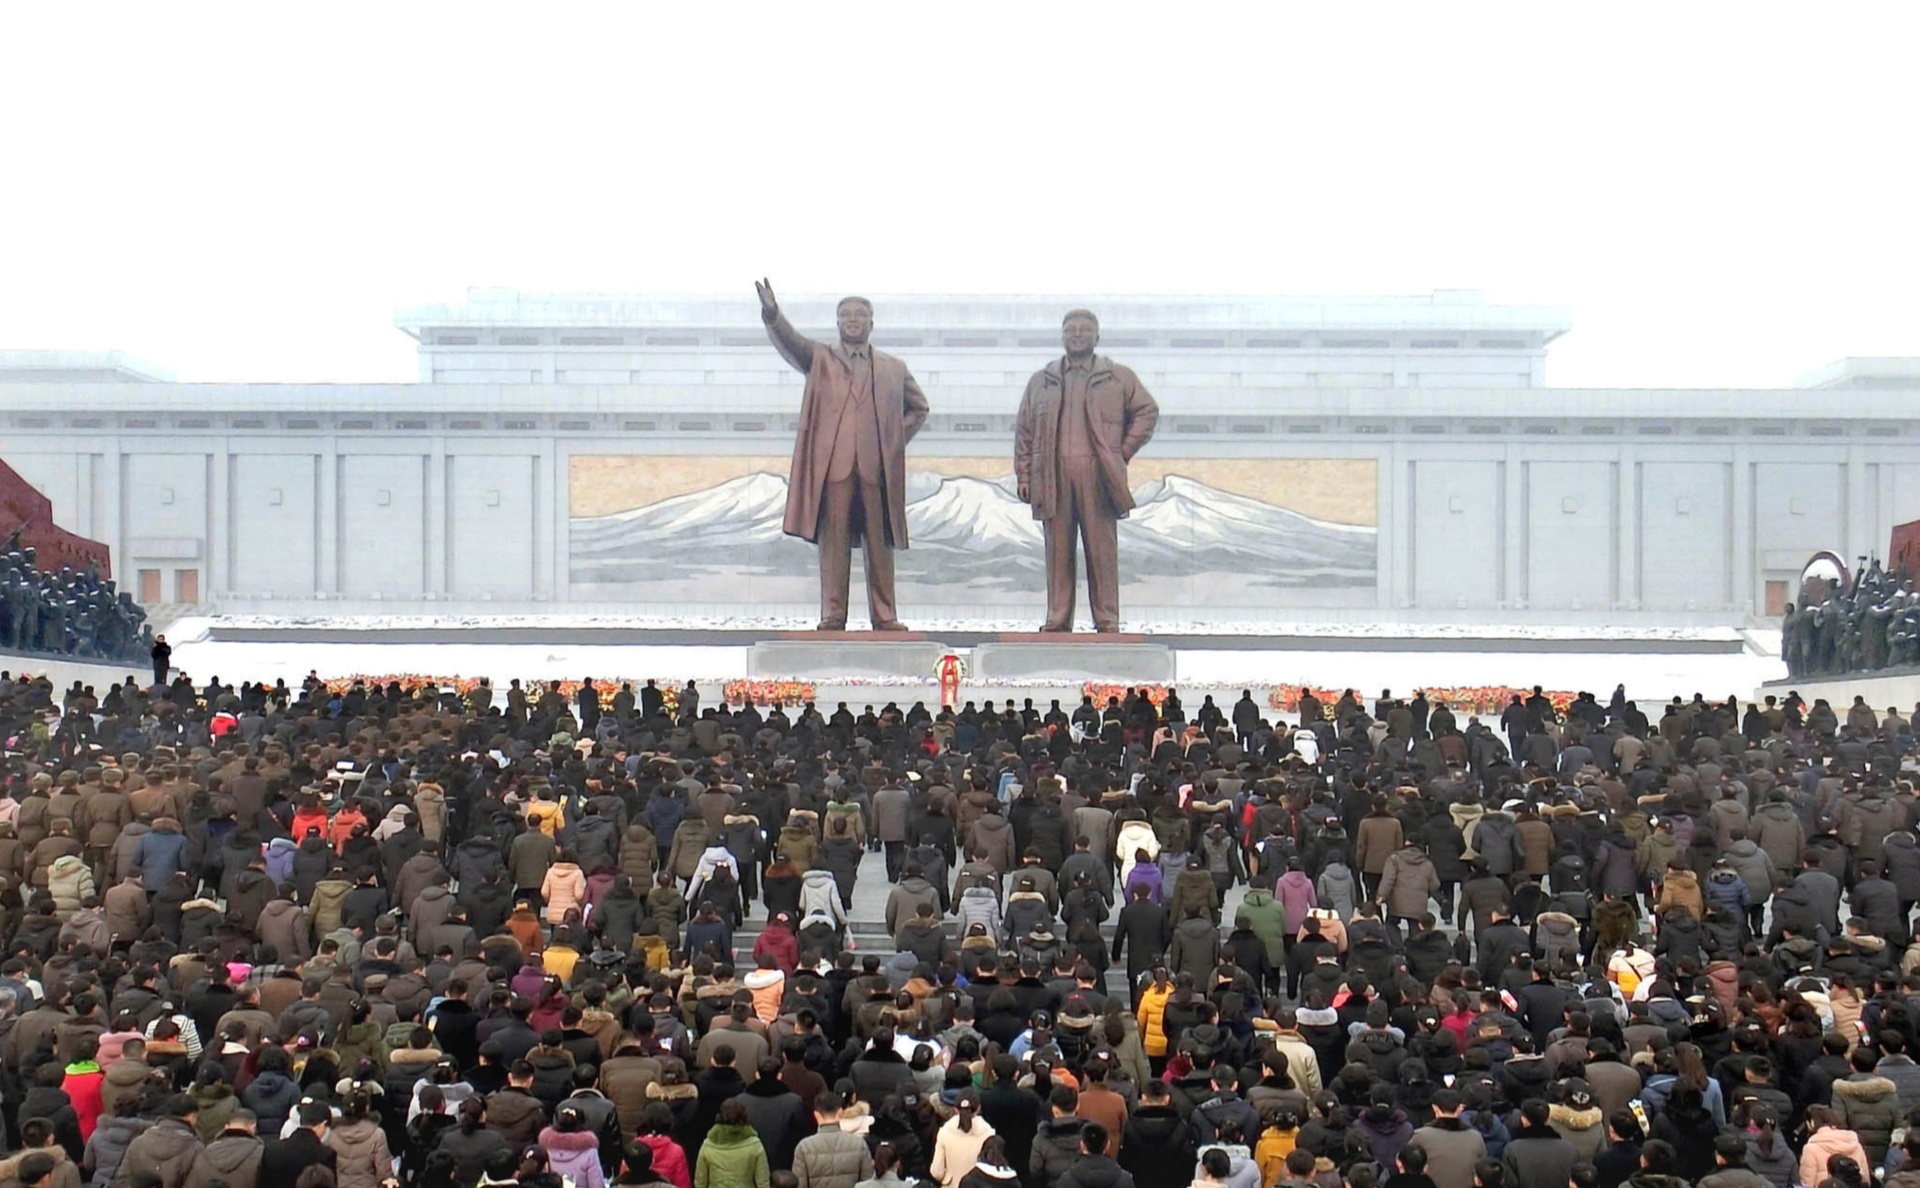 Столица КНДР Пхеньян